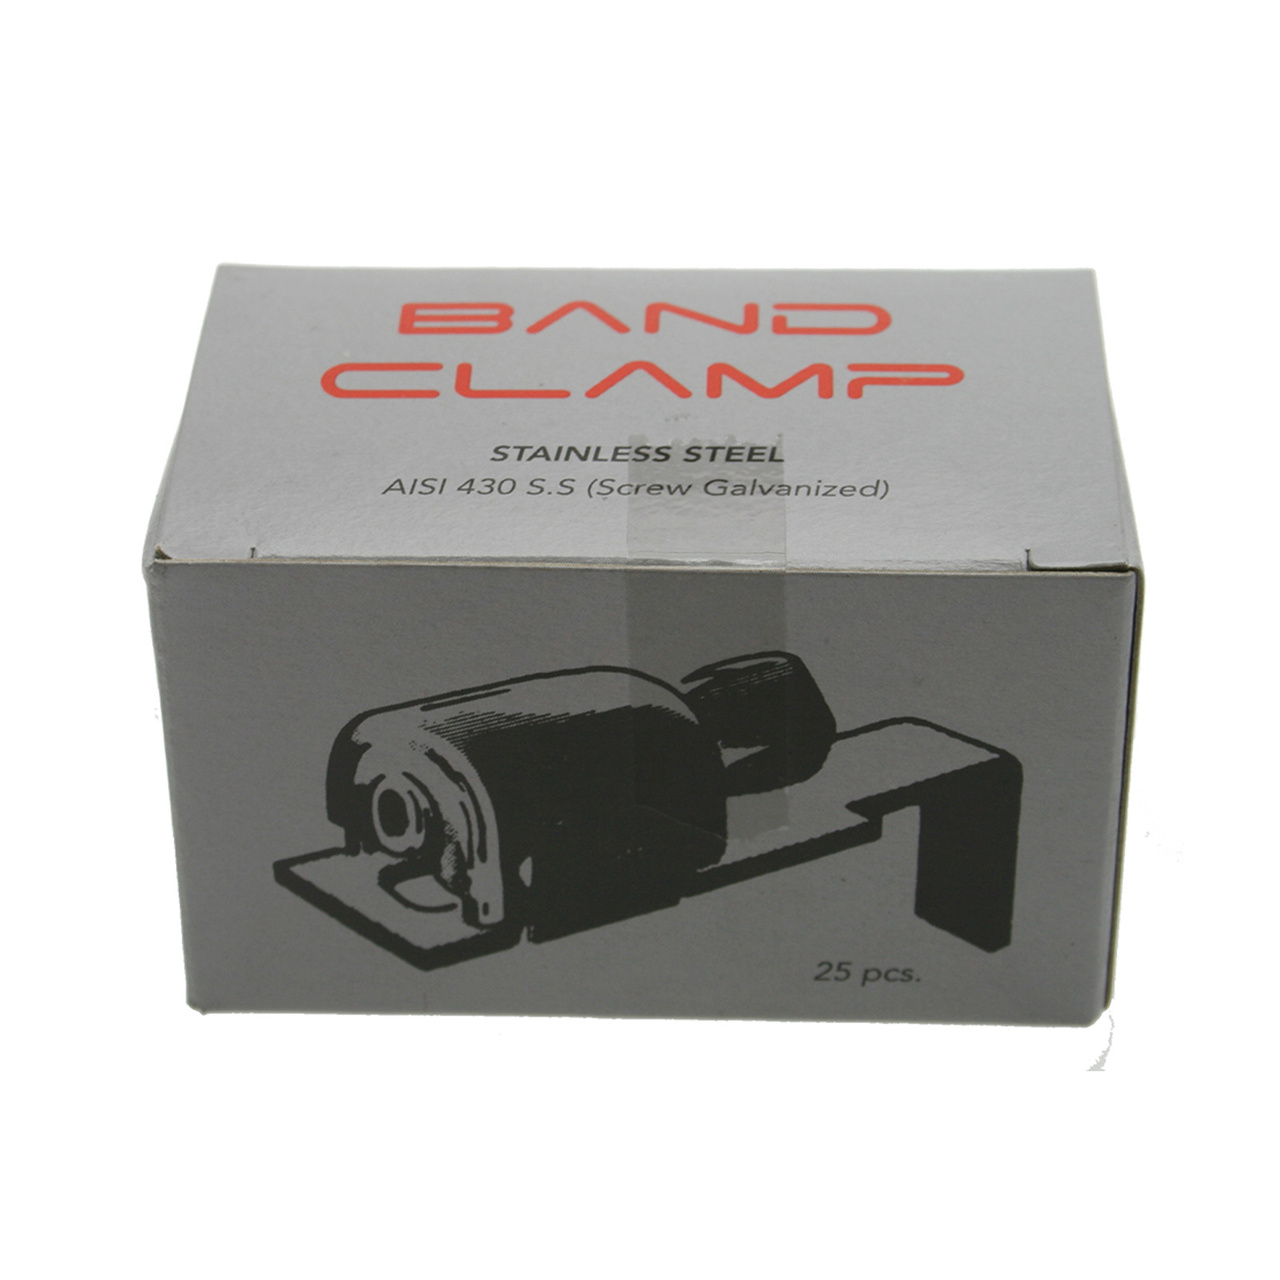 Band Clamp